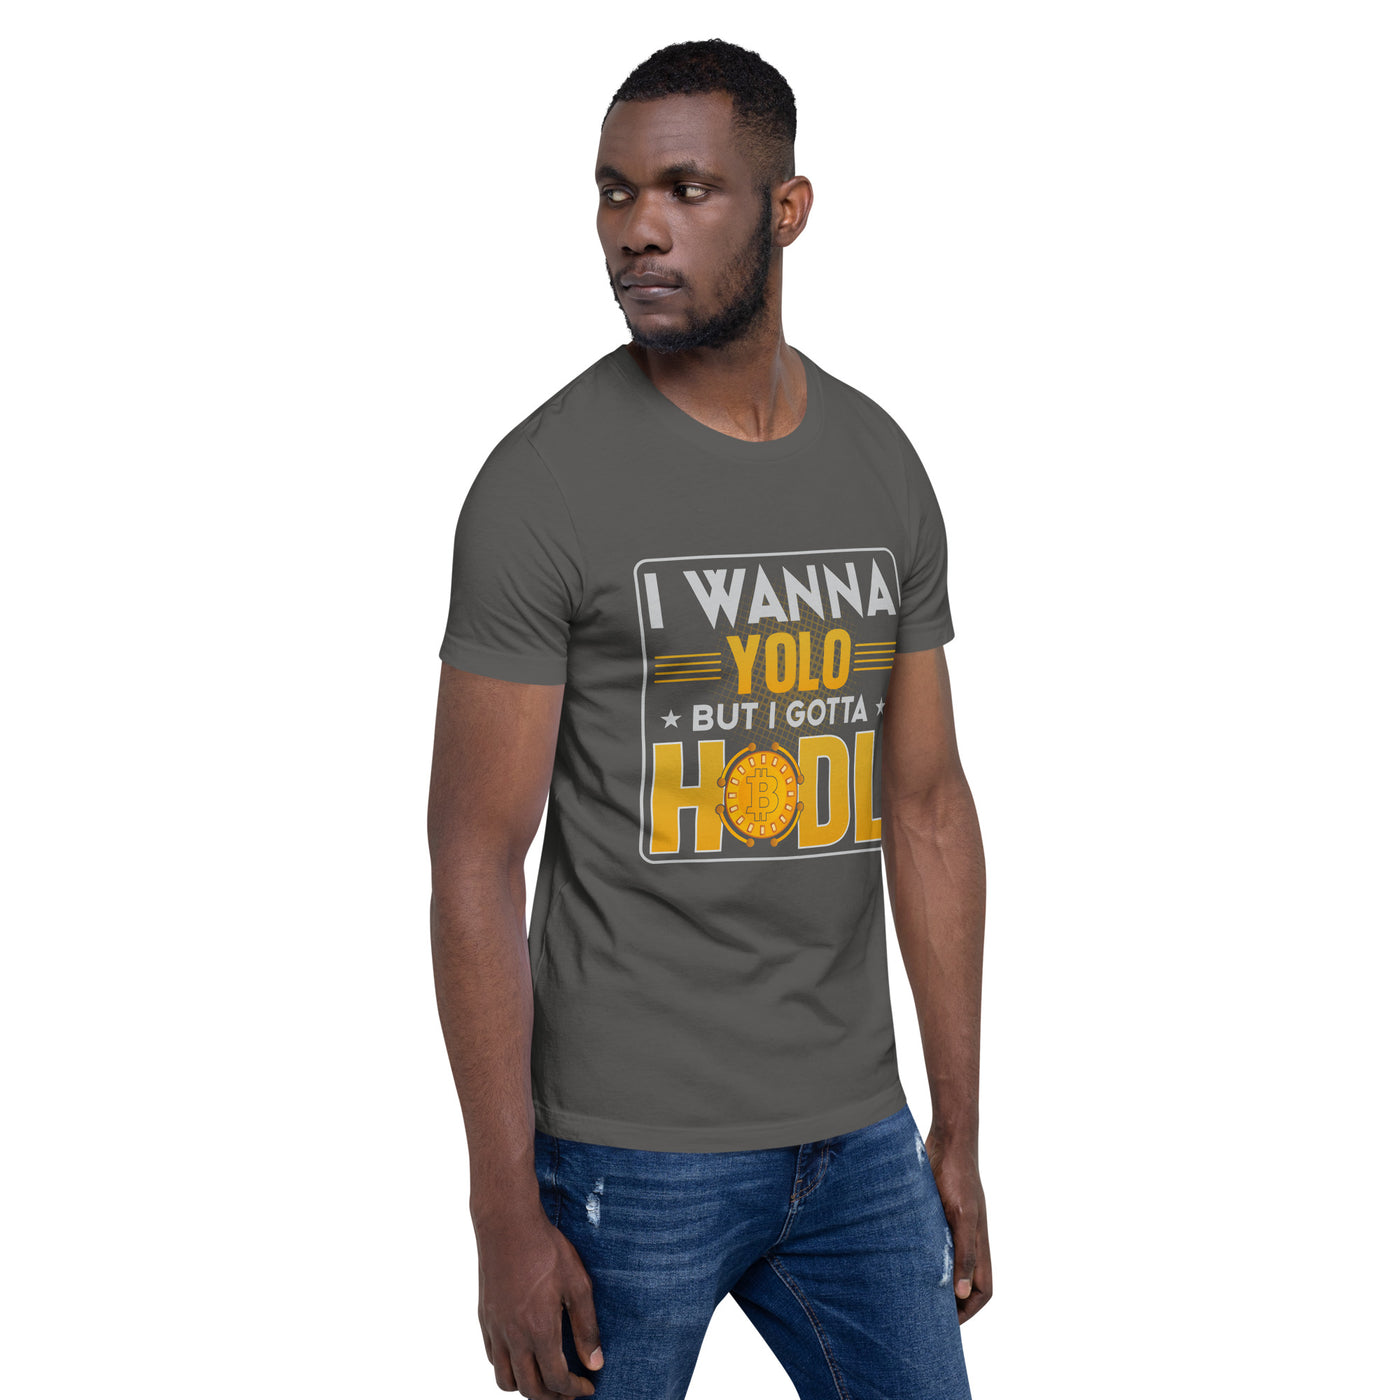 I wanna YOLO but I gotta HODL Unisex t-shirt